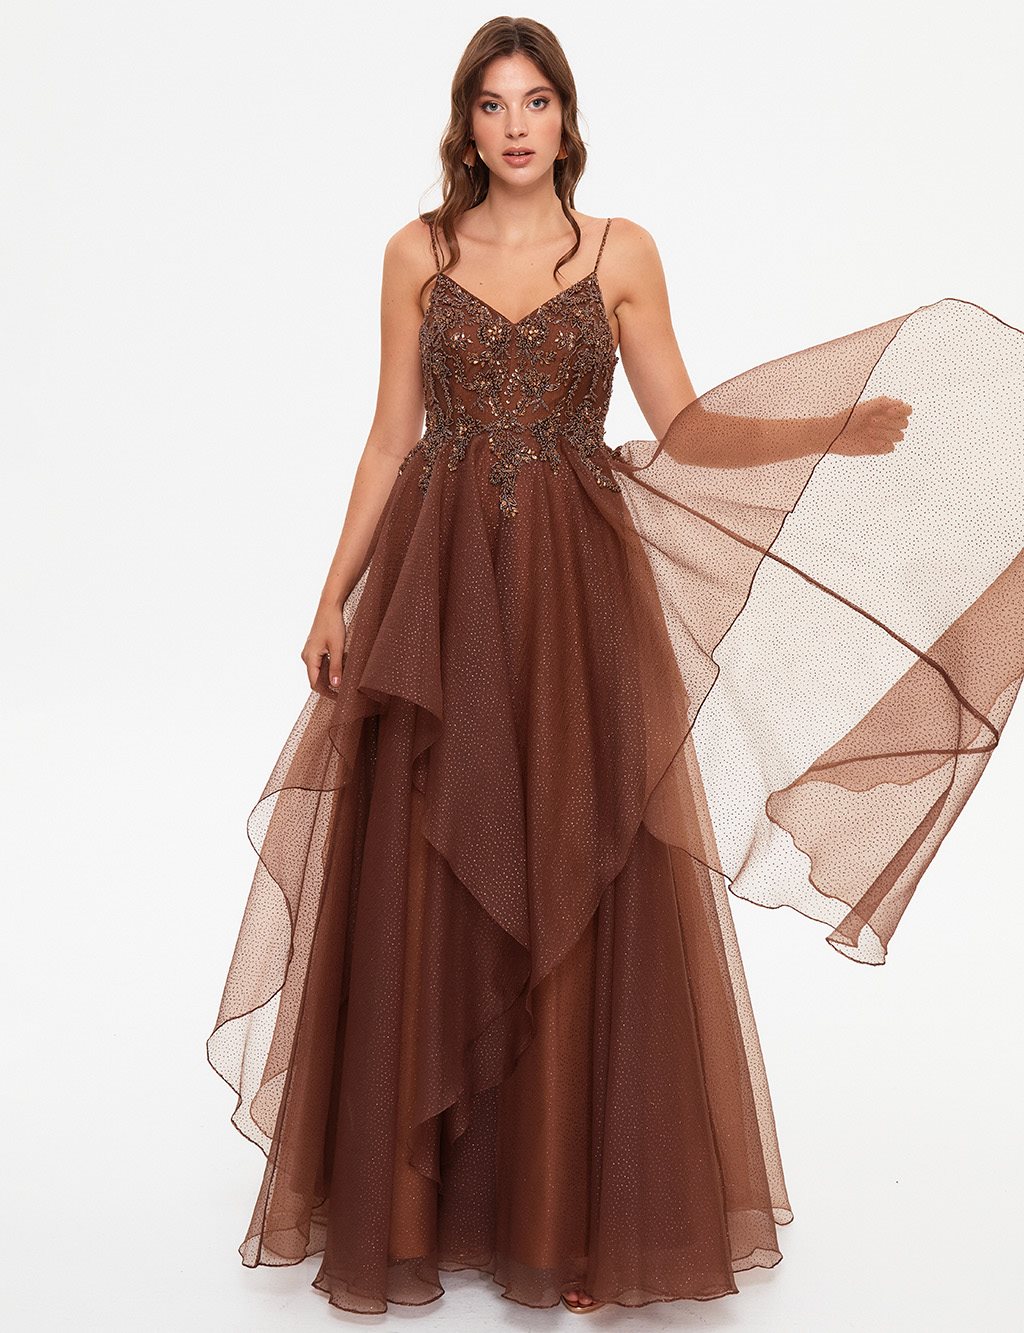 TIARA Thin Straps Embroidered Evening Dress Bronze Brown